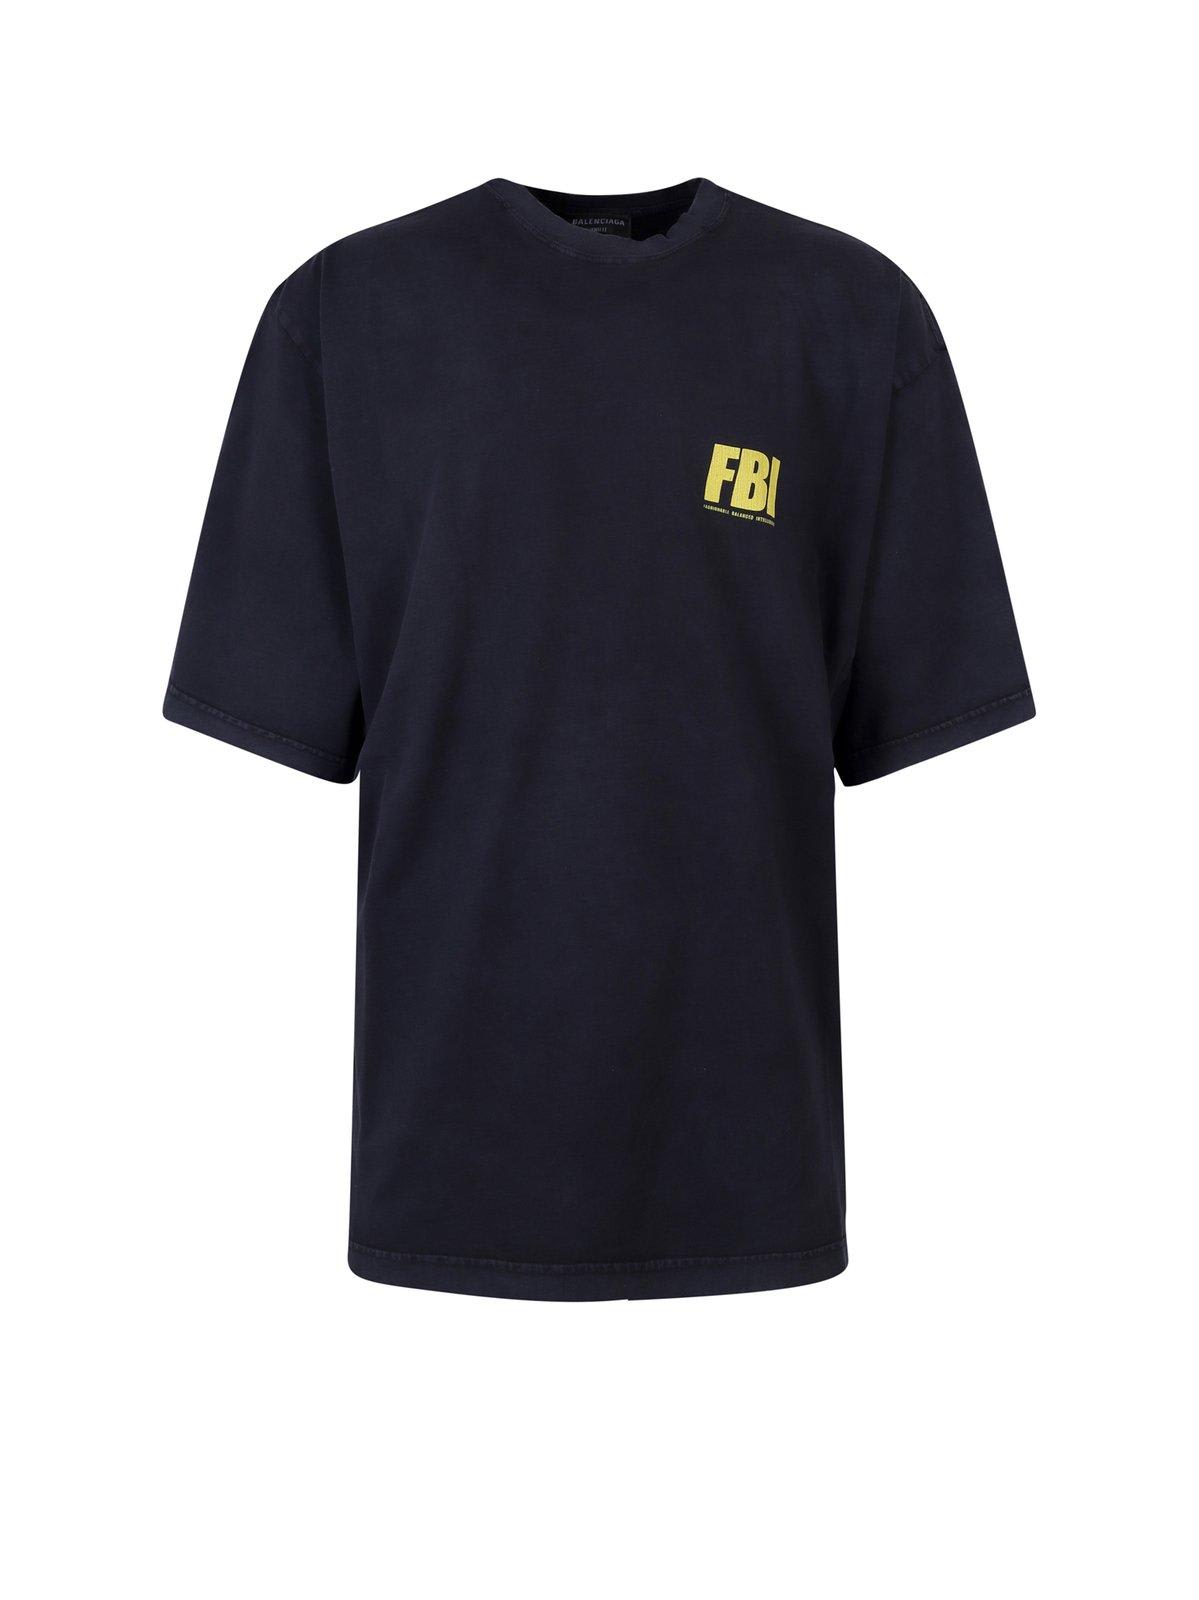 Balenciaga Fbi Print T-shirt